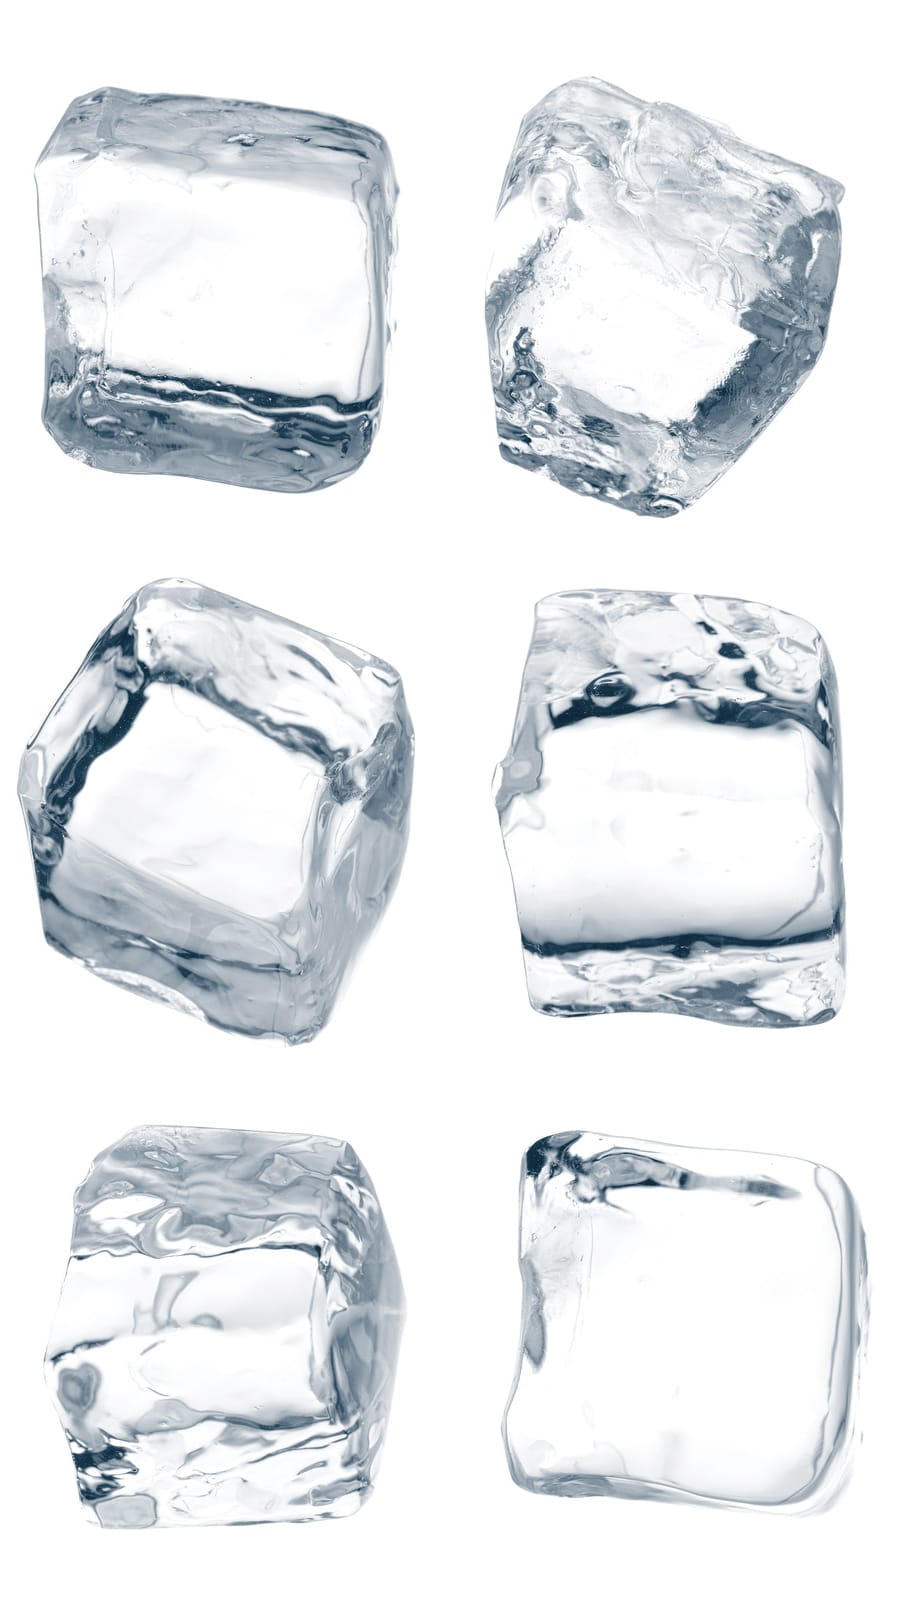 Crystal clear ice cubes